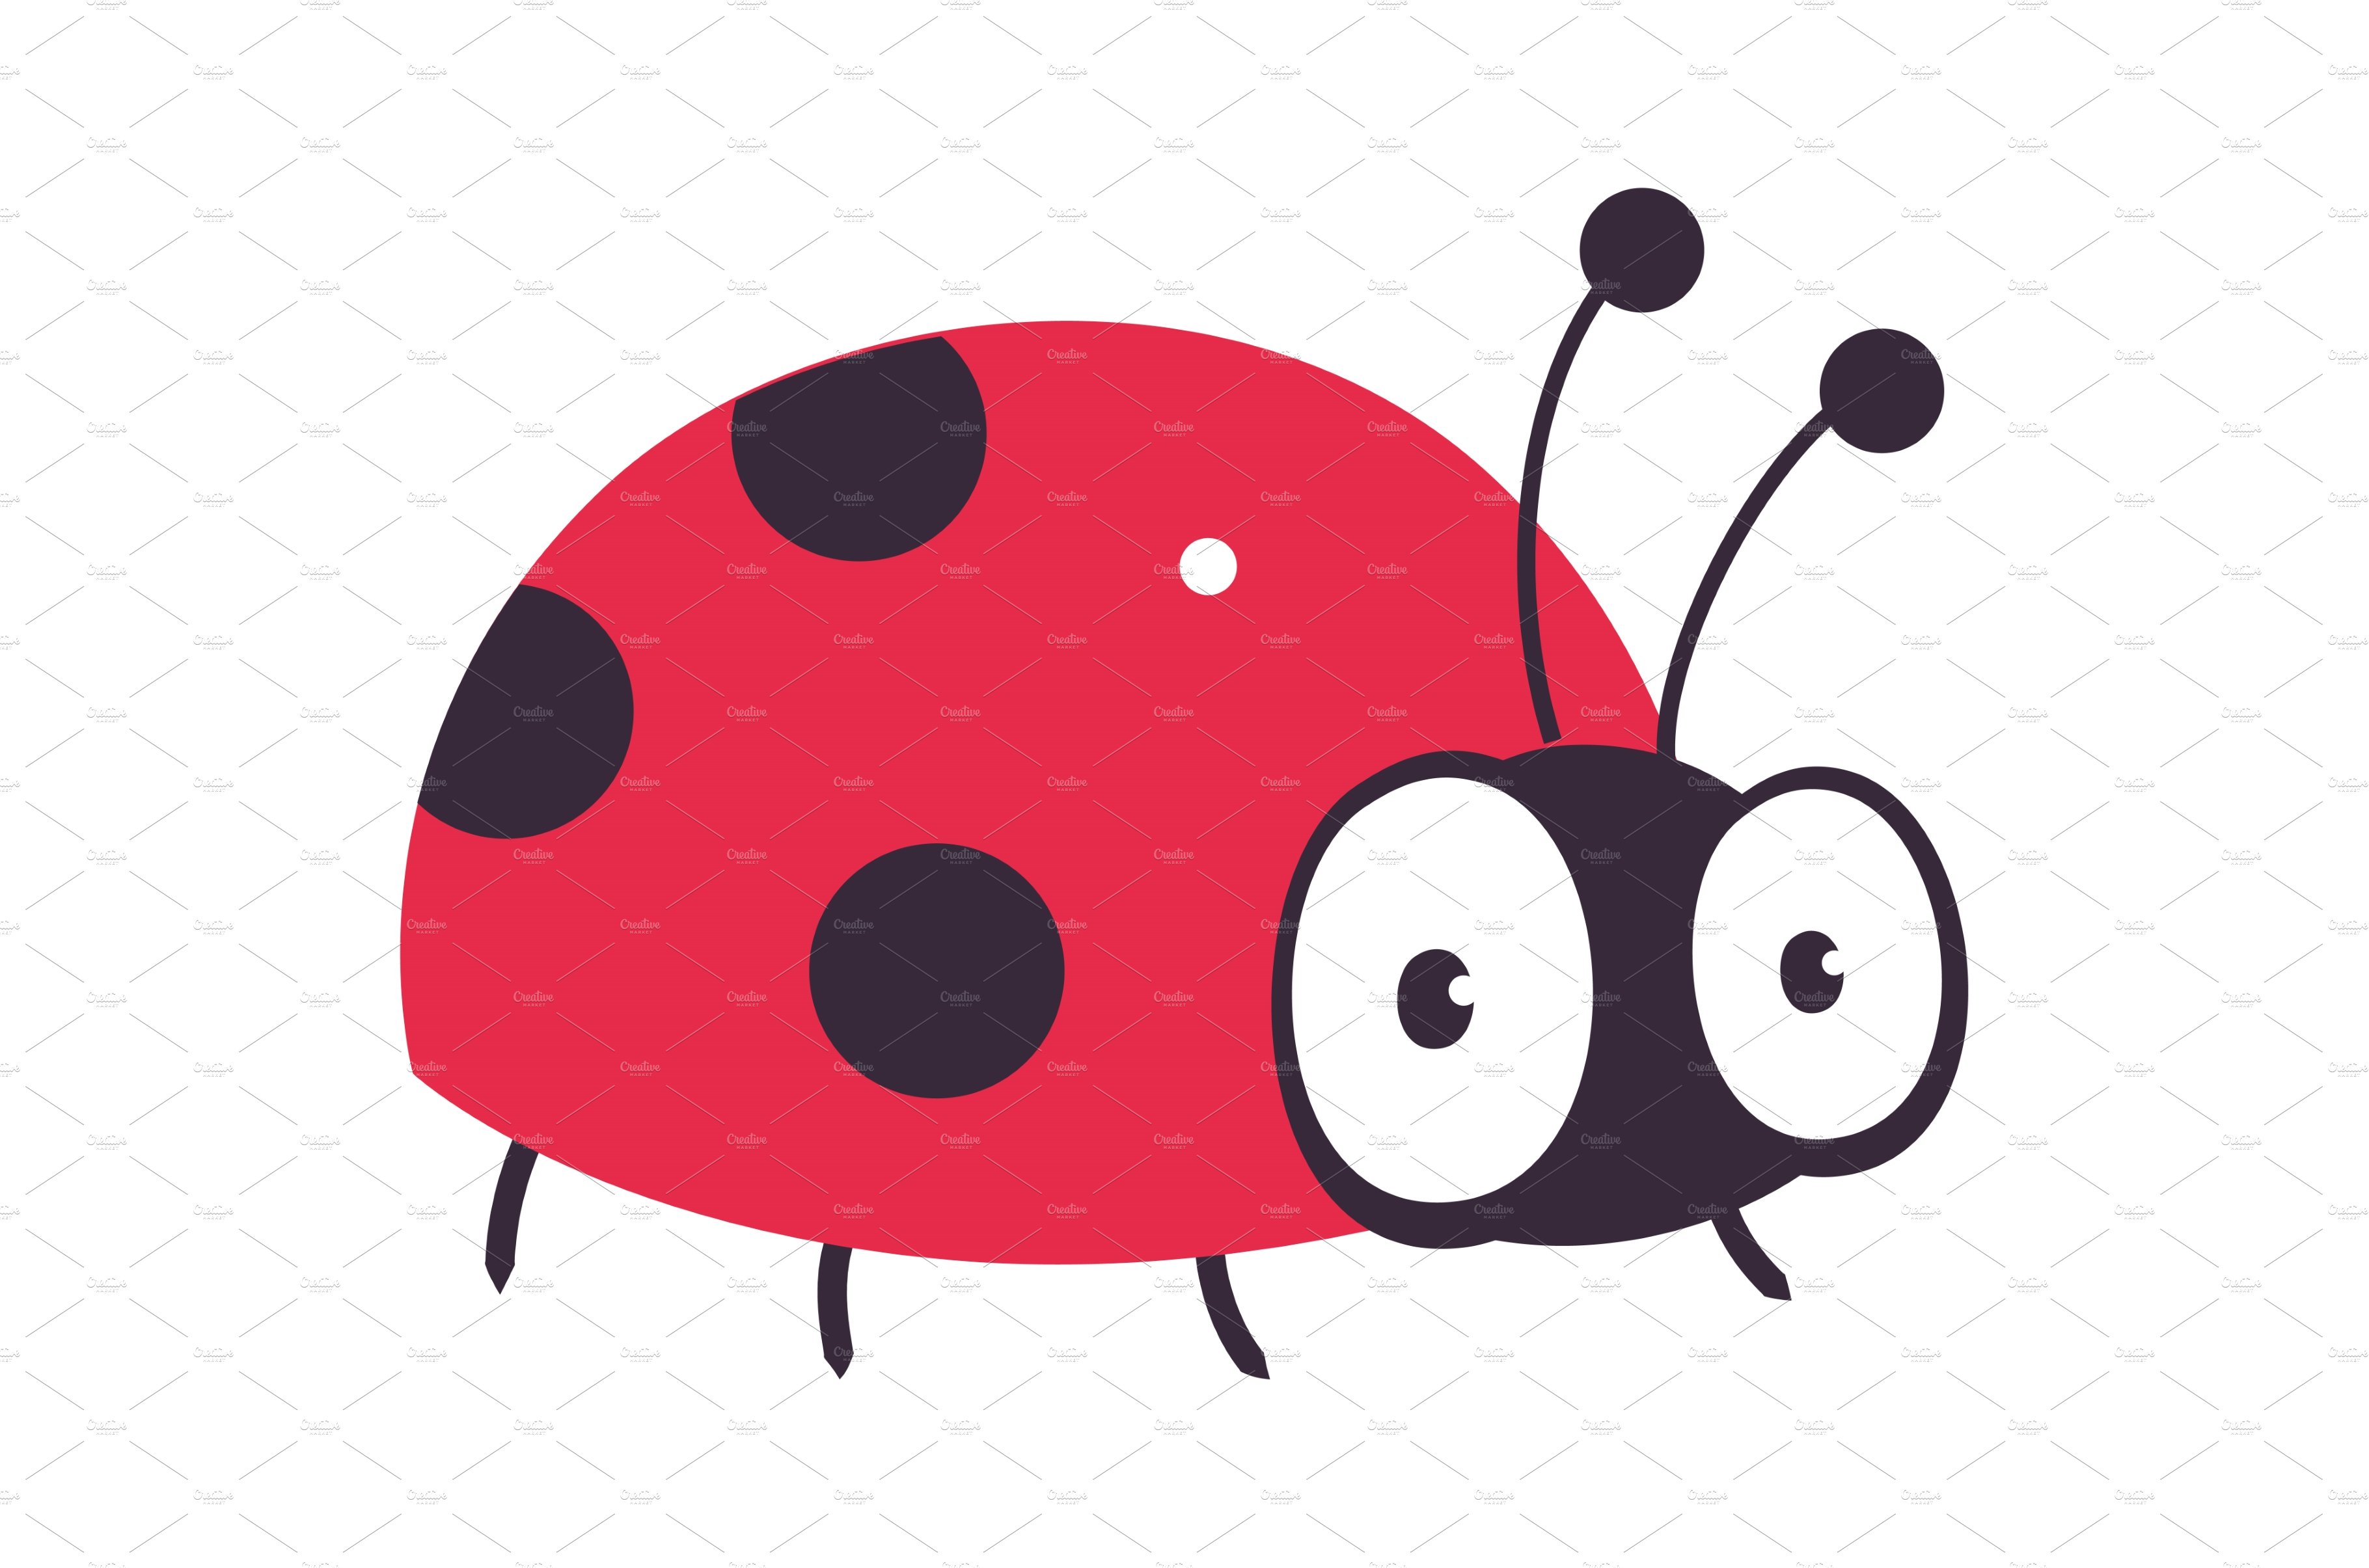 Cute Ladybug Insect Animal Animated PNG Illustration Stock Photo